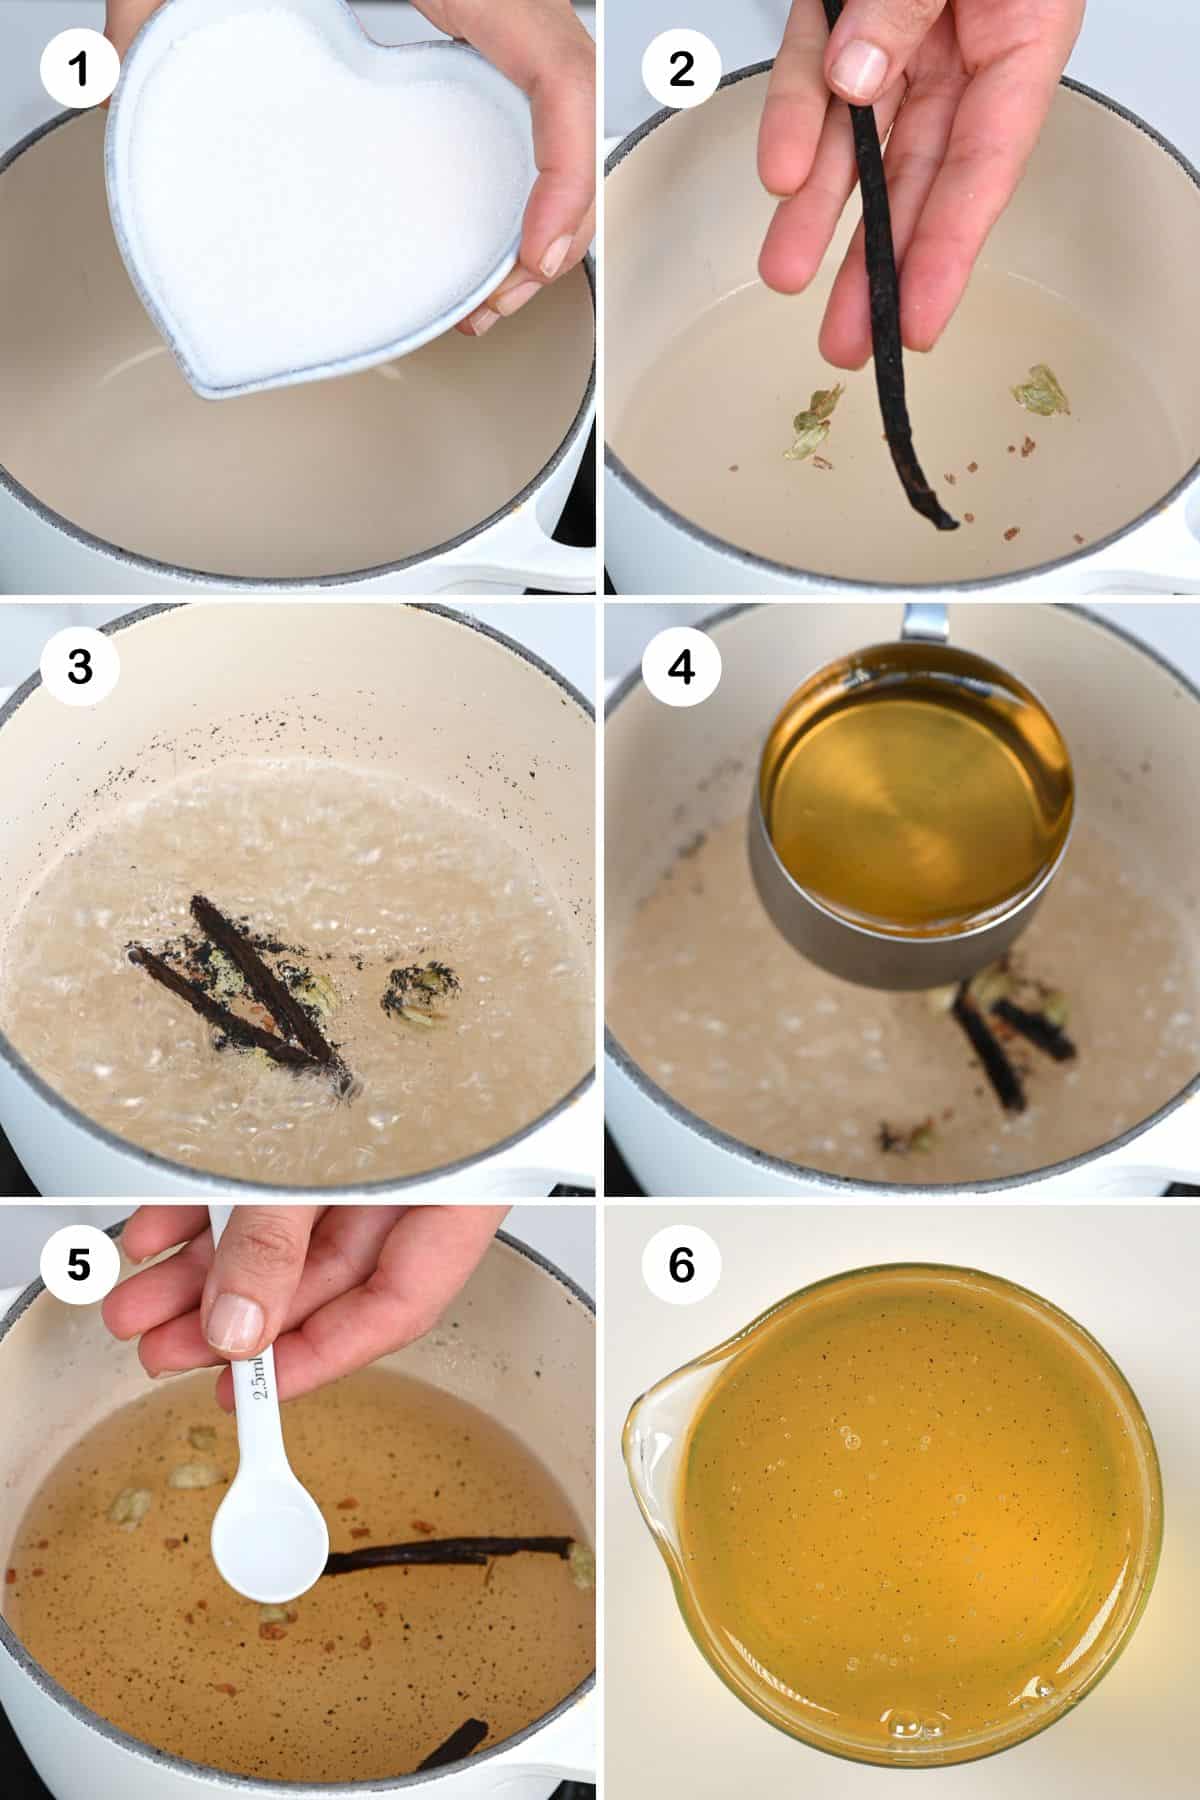 Steps for making baklava syrup